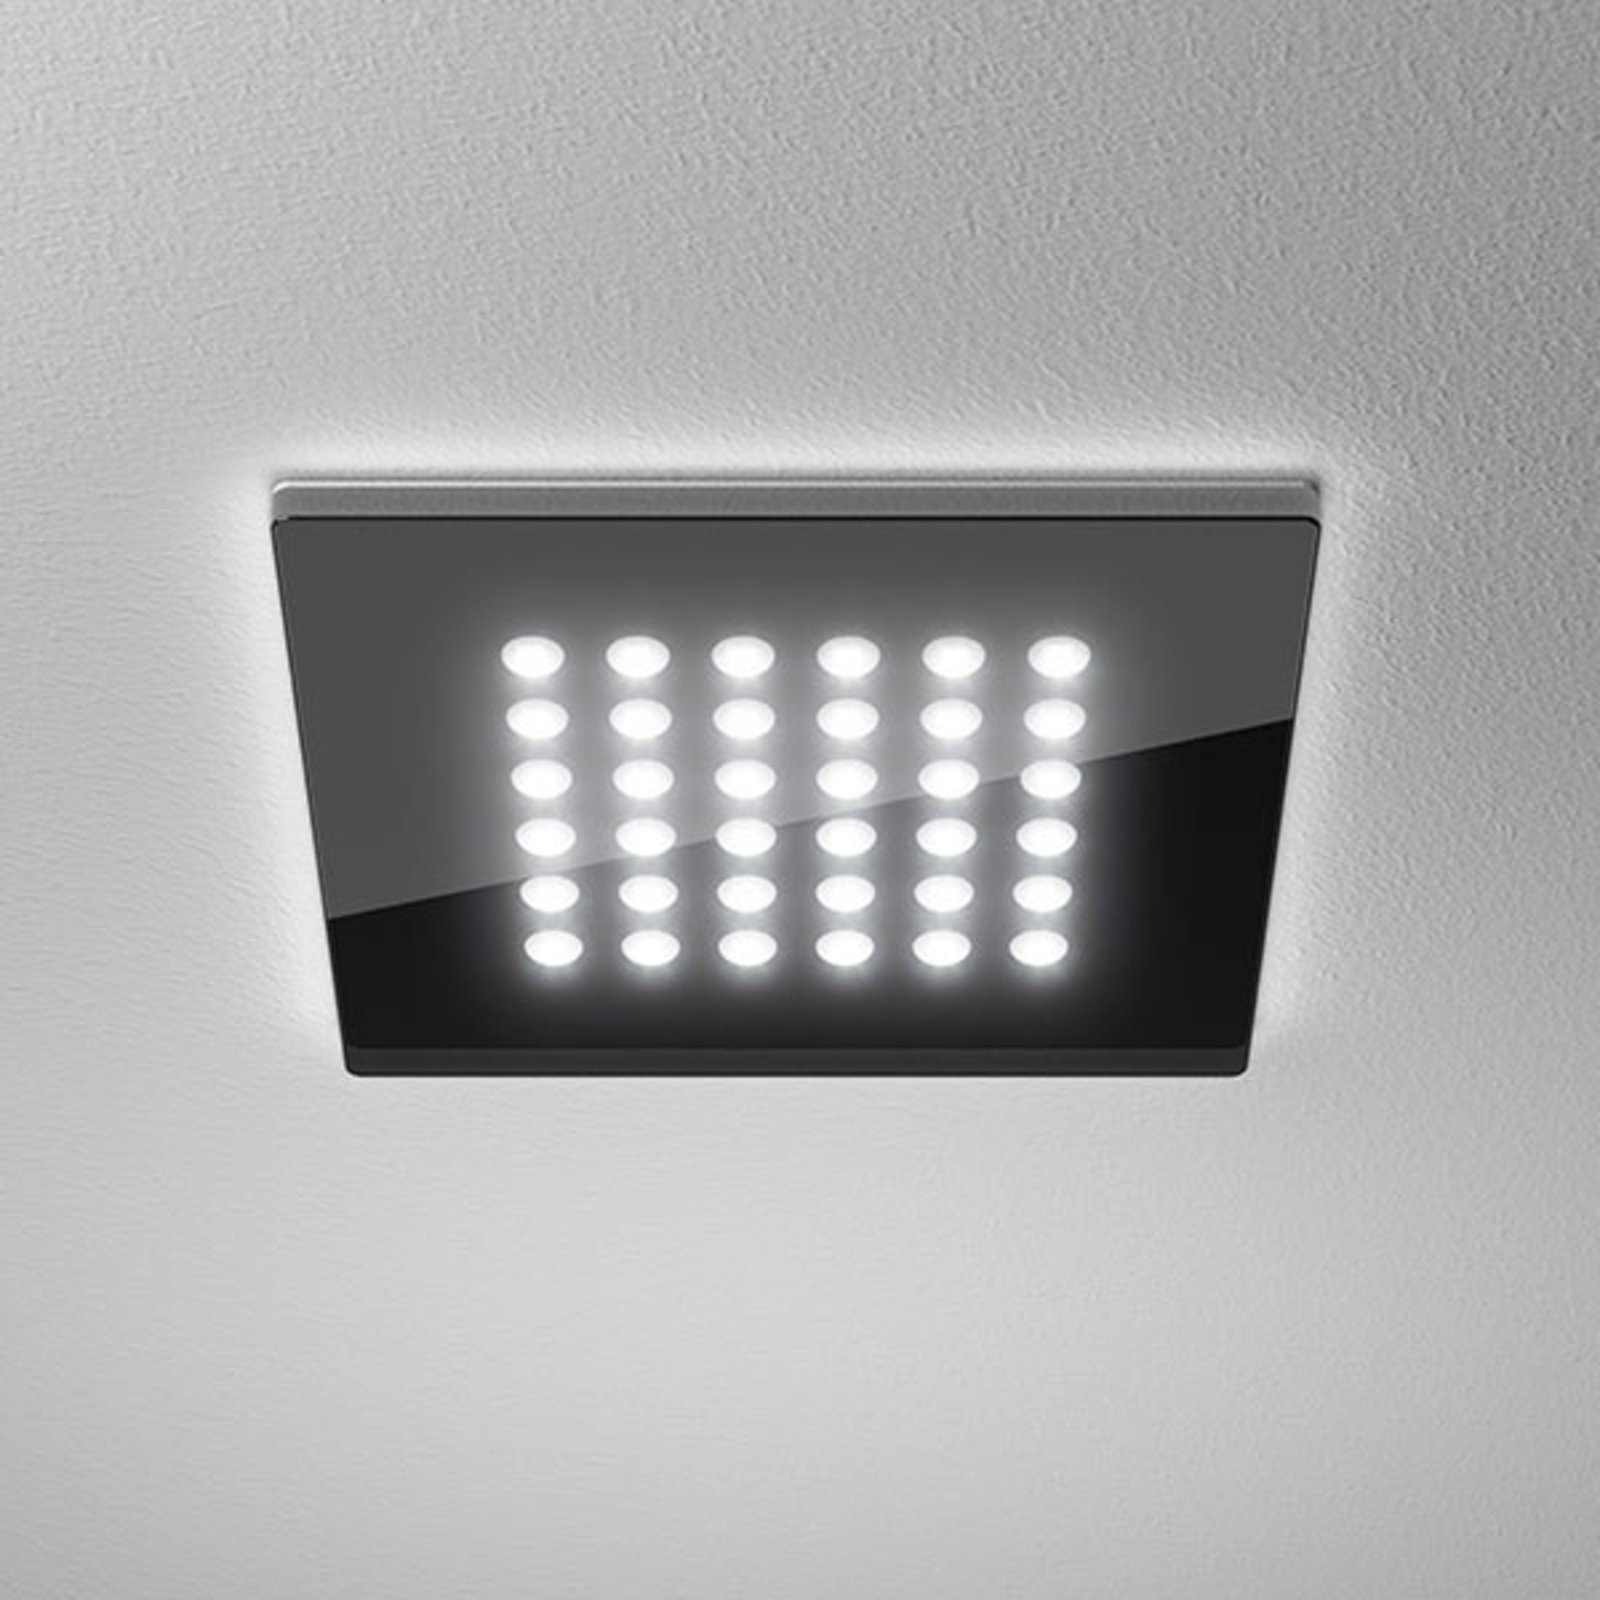 Domino Flat Square LED-alasvalo, 16 x 16 cm, 11 W